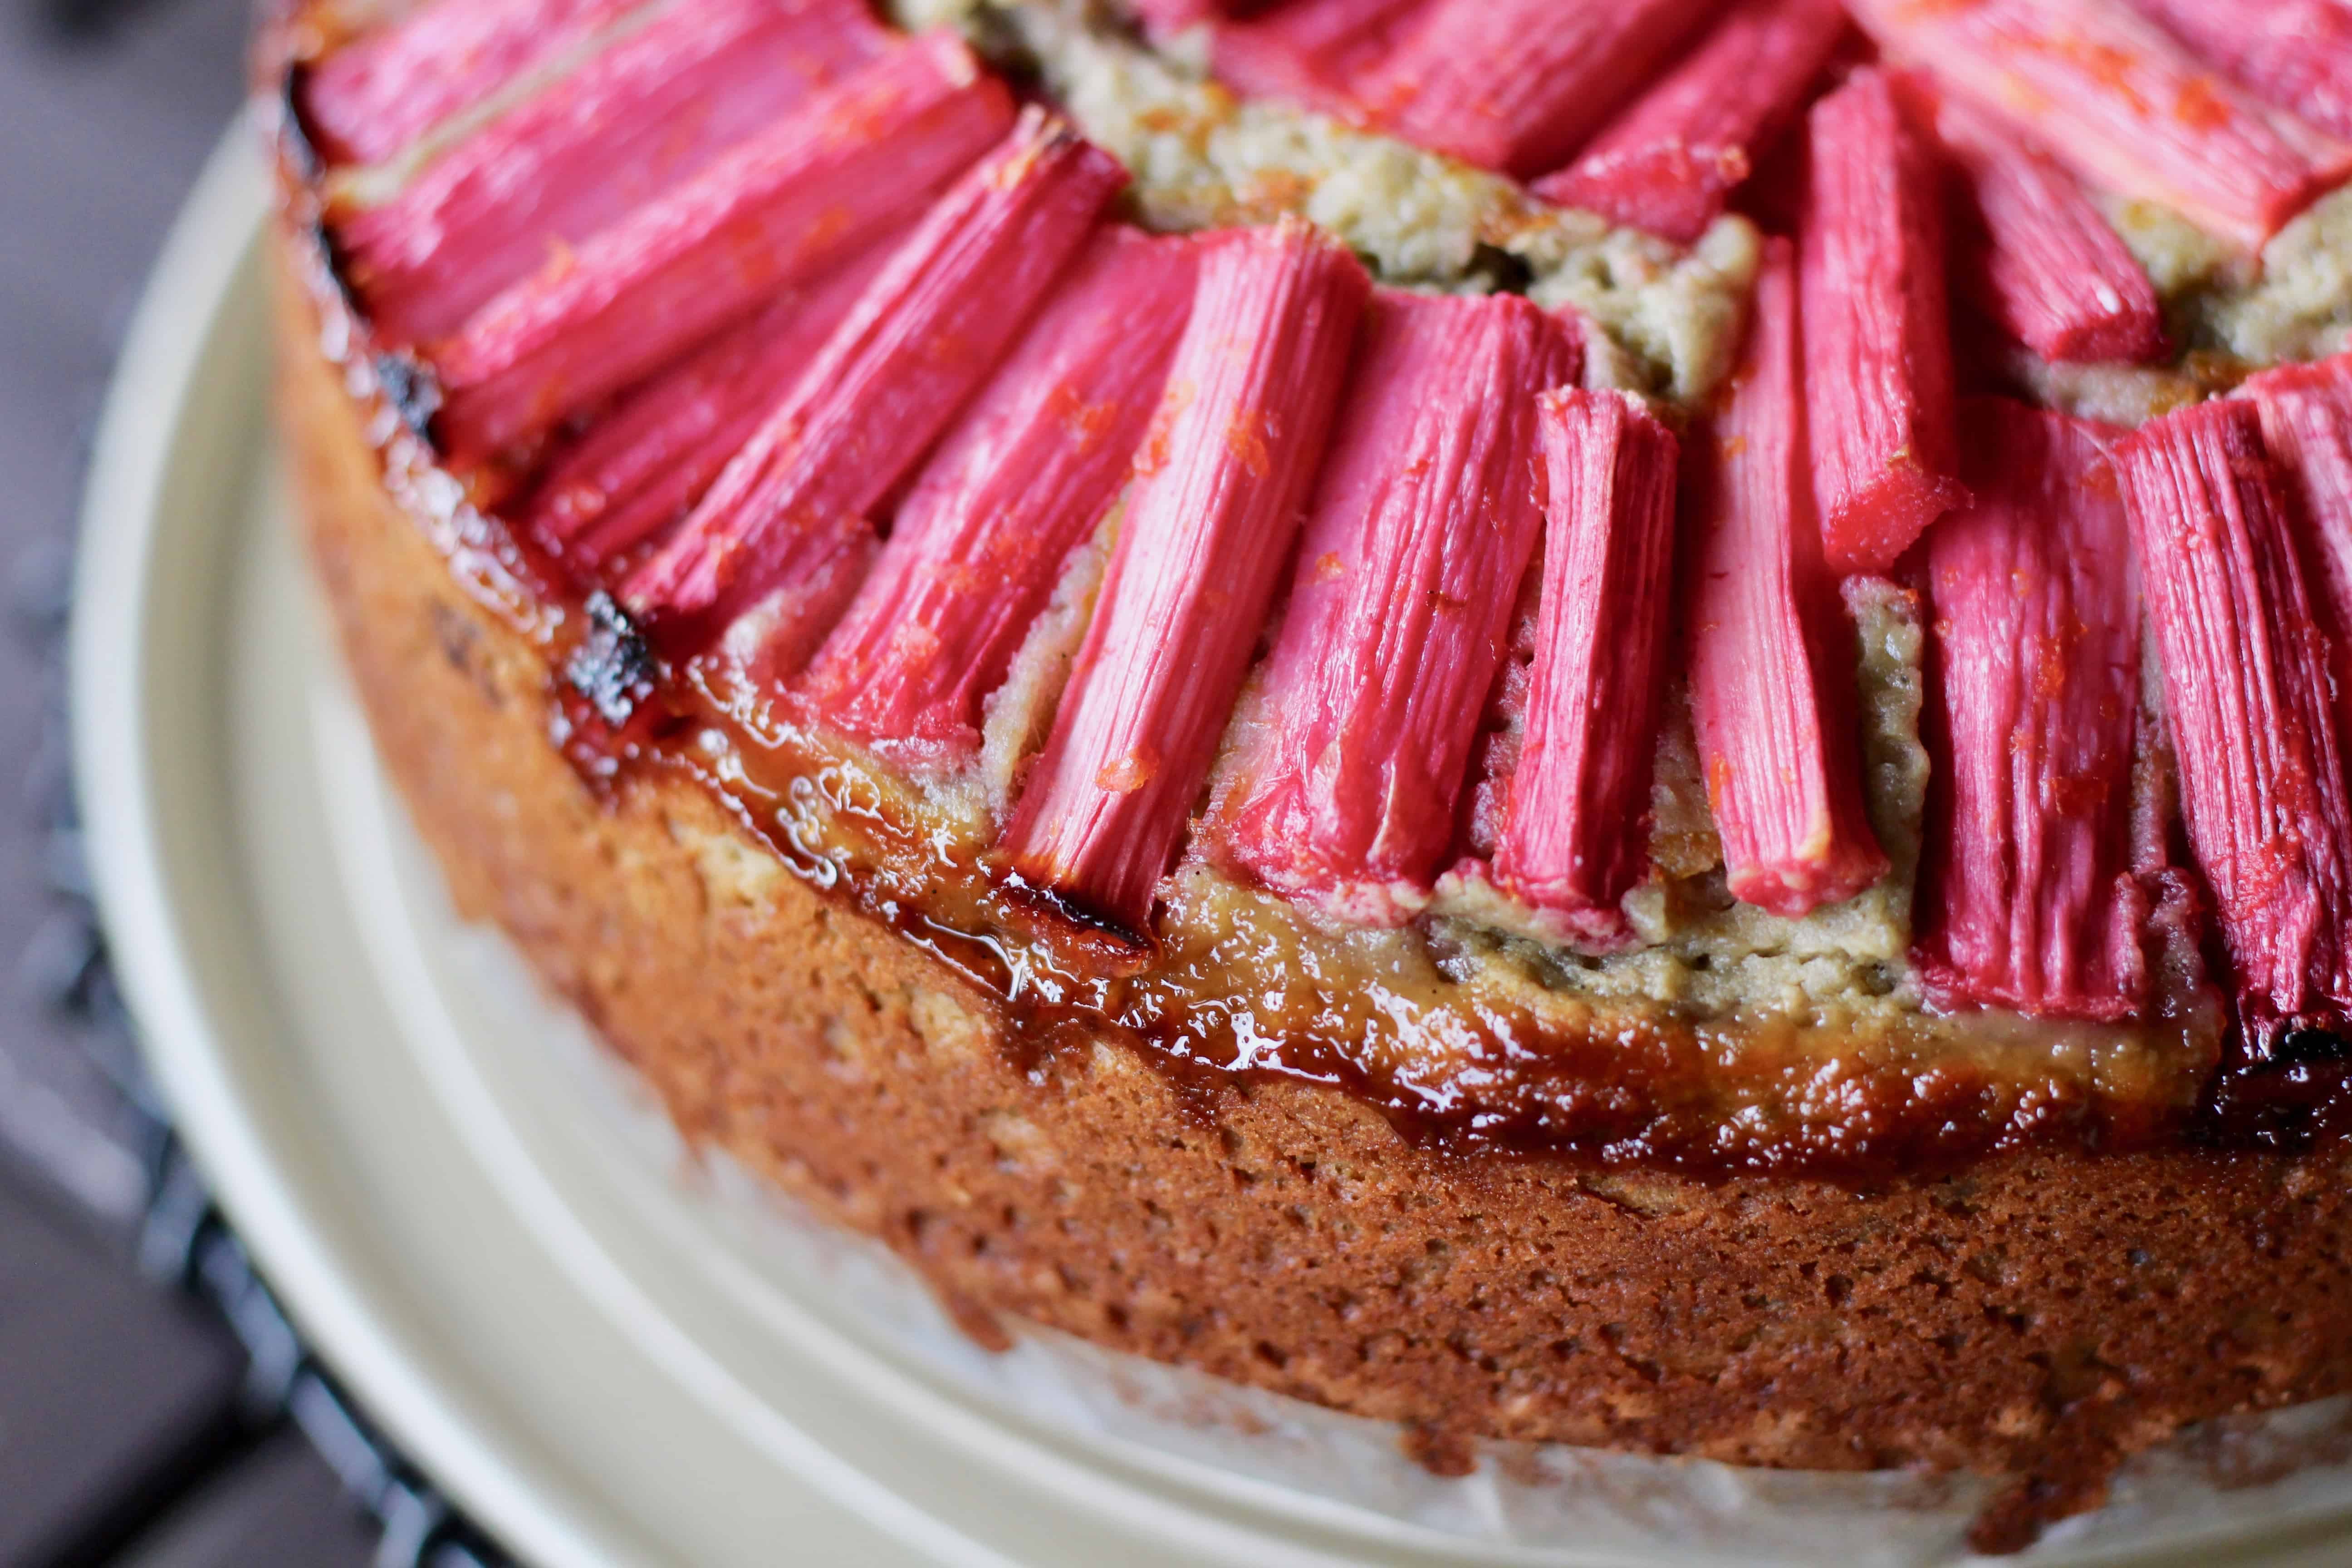 Green Tea Rhubarb Cake - 9